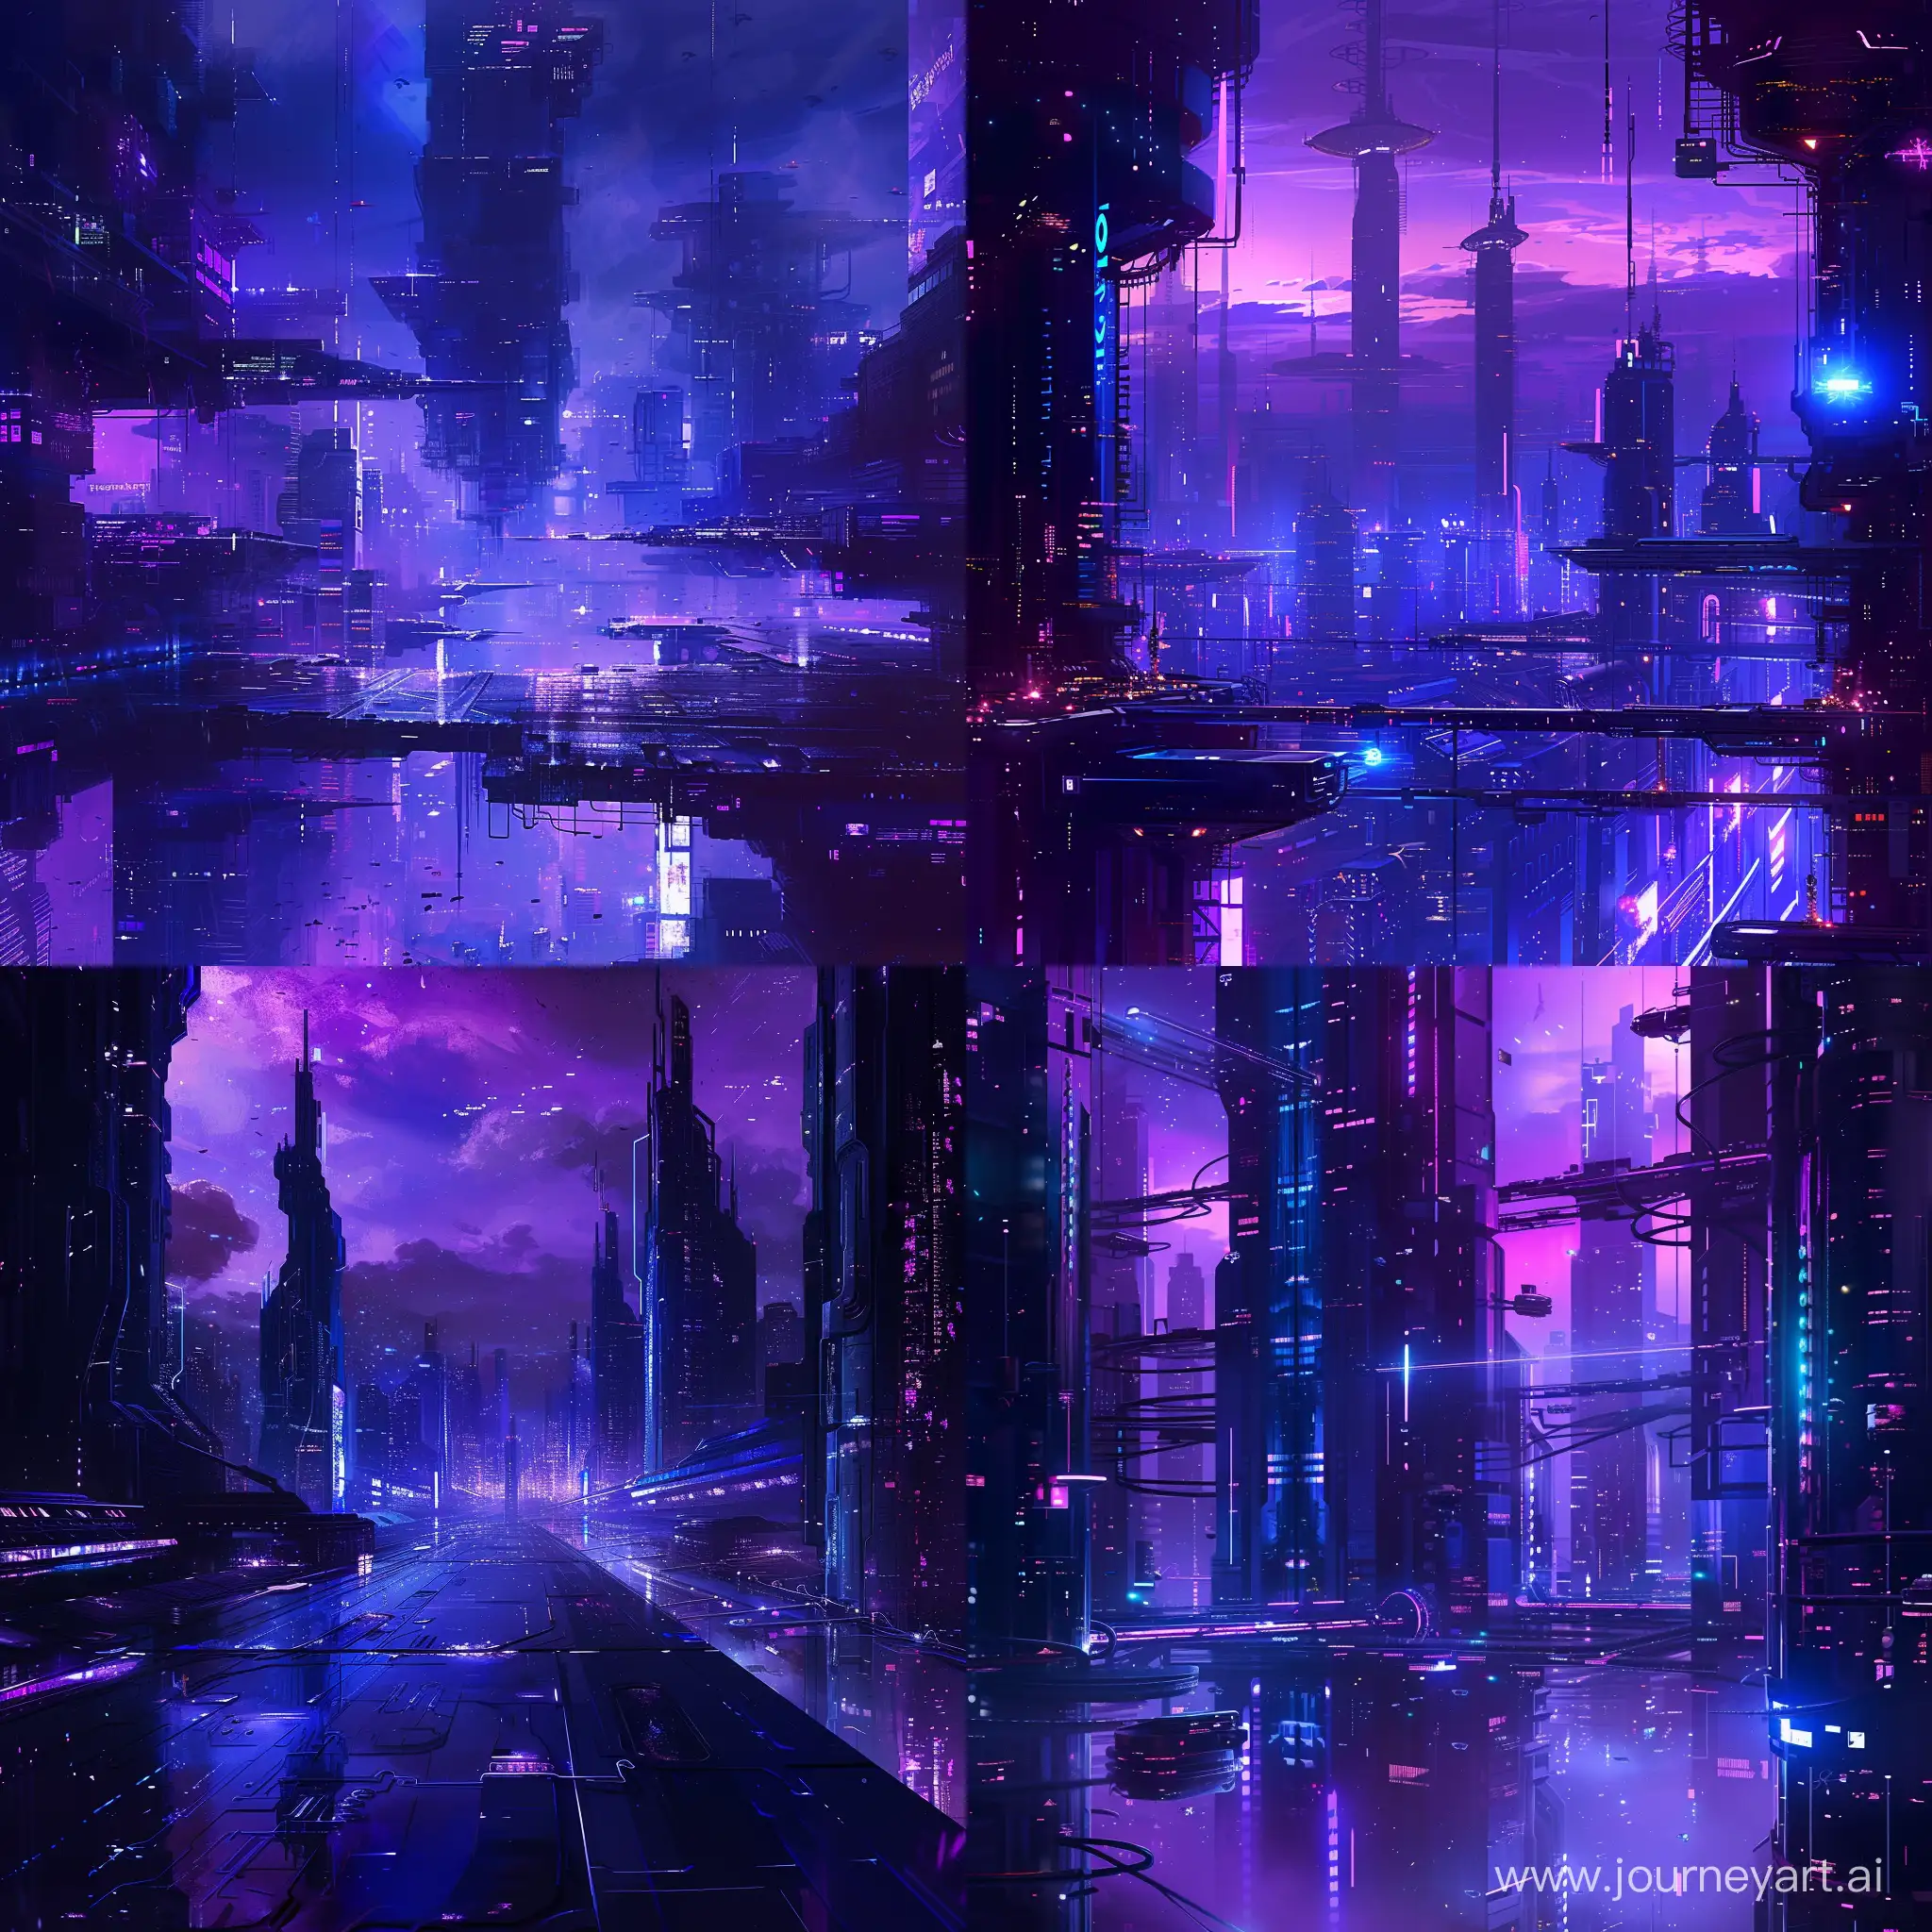 Futuristic-Night-Cityscape-in-Purple-and-Blue-Hues